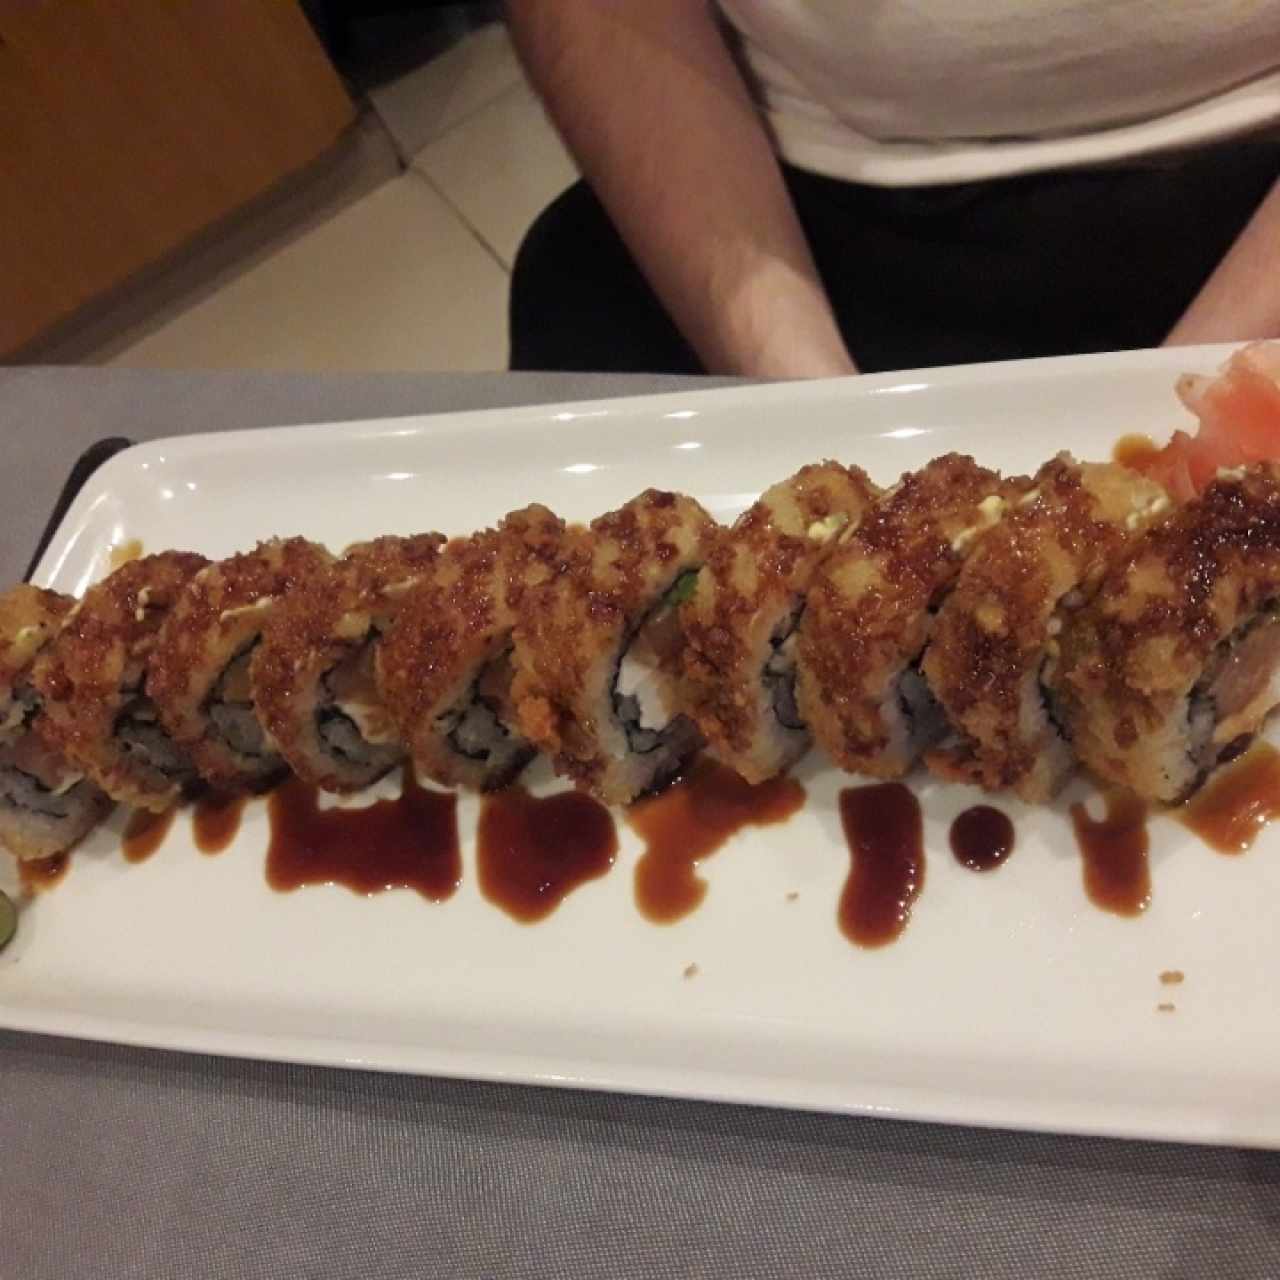 Roll sushi